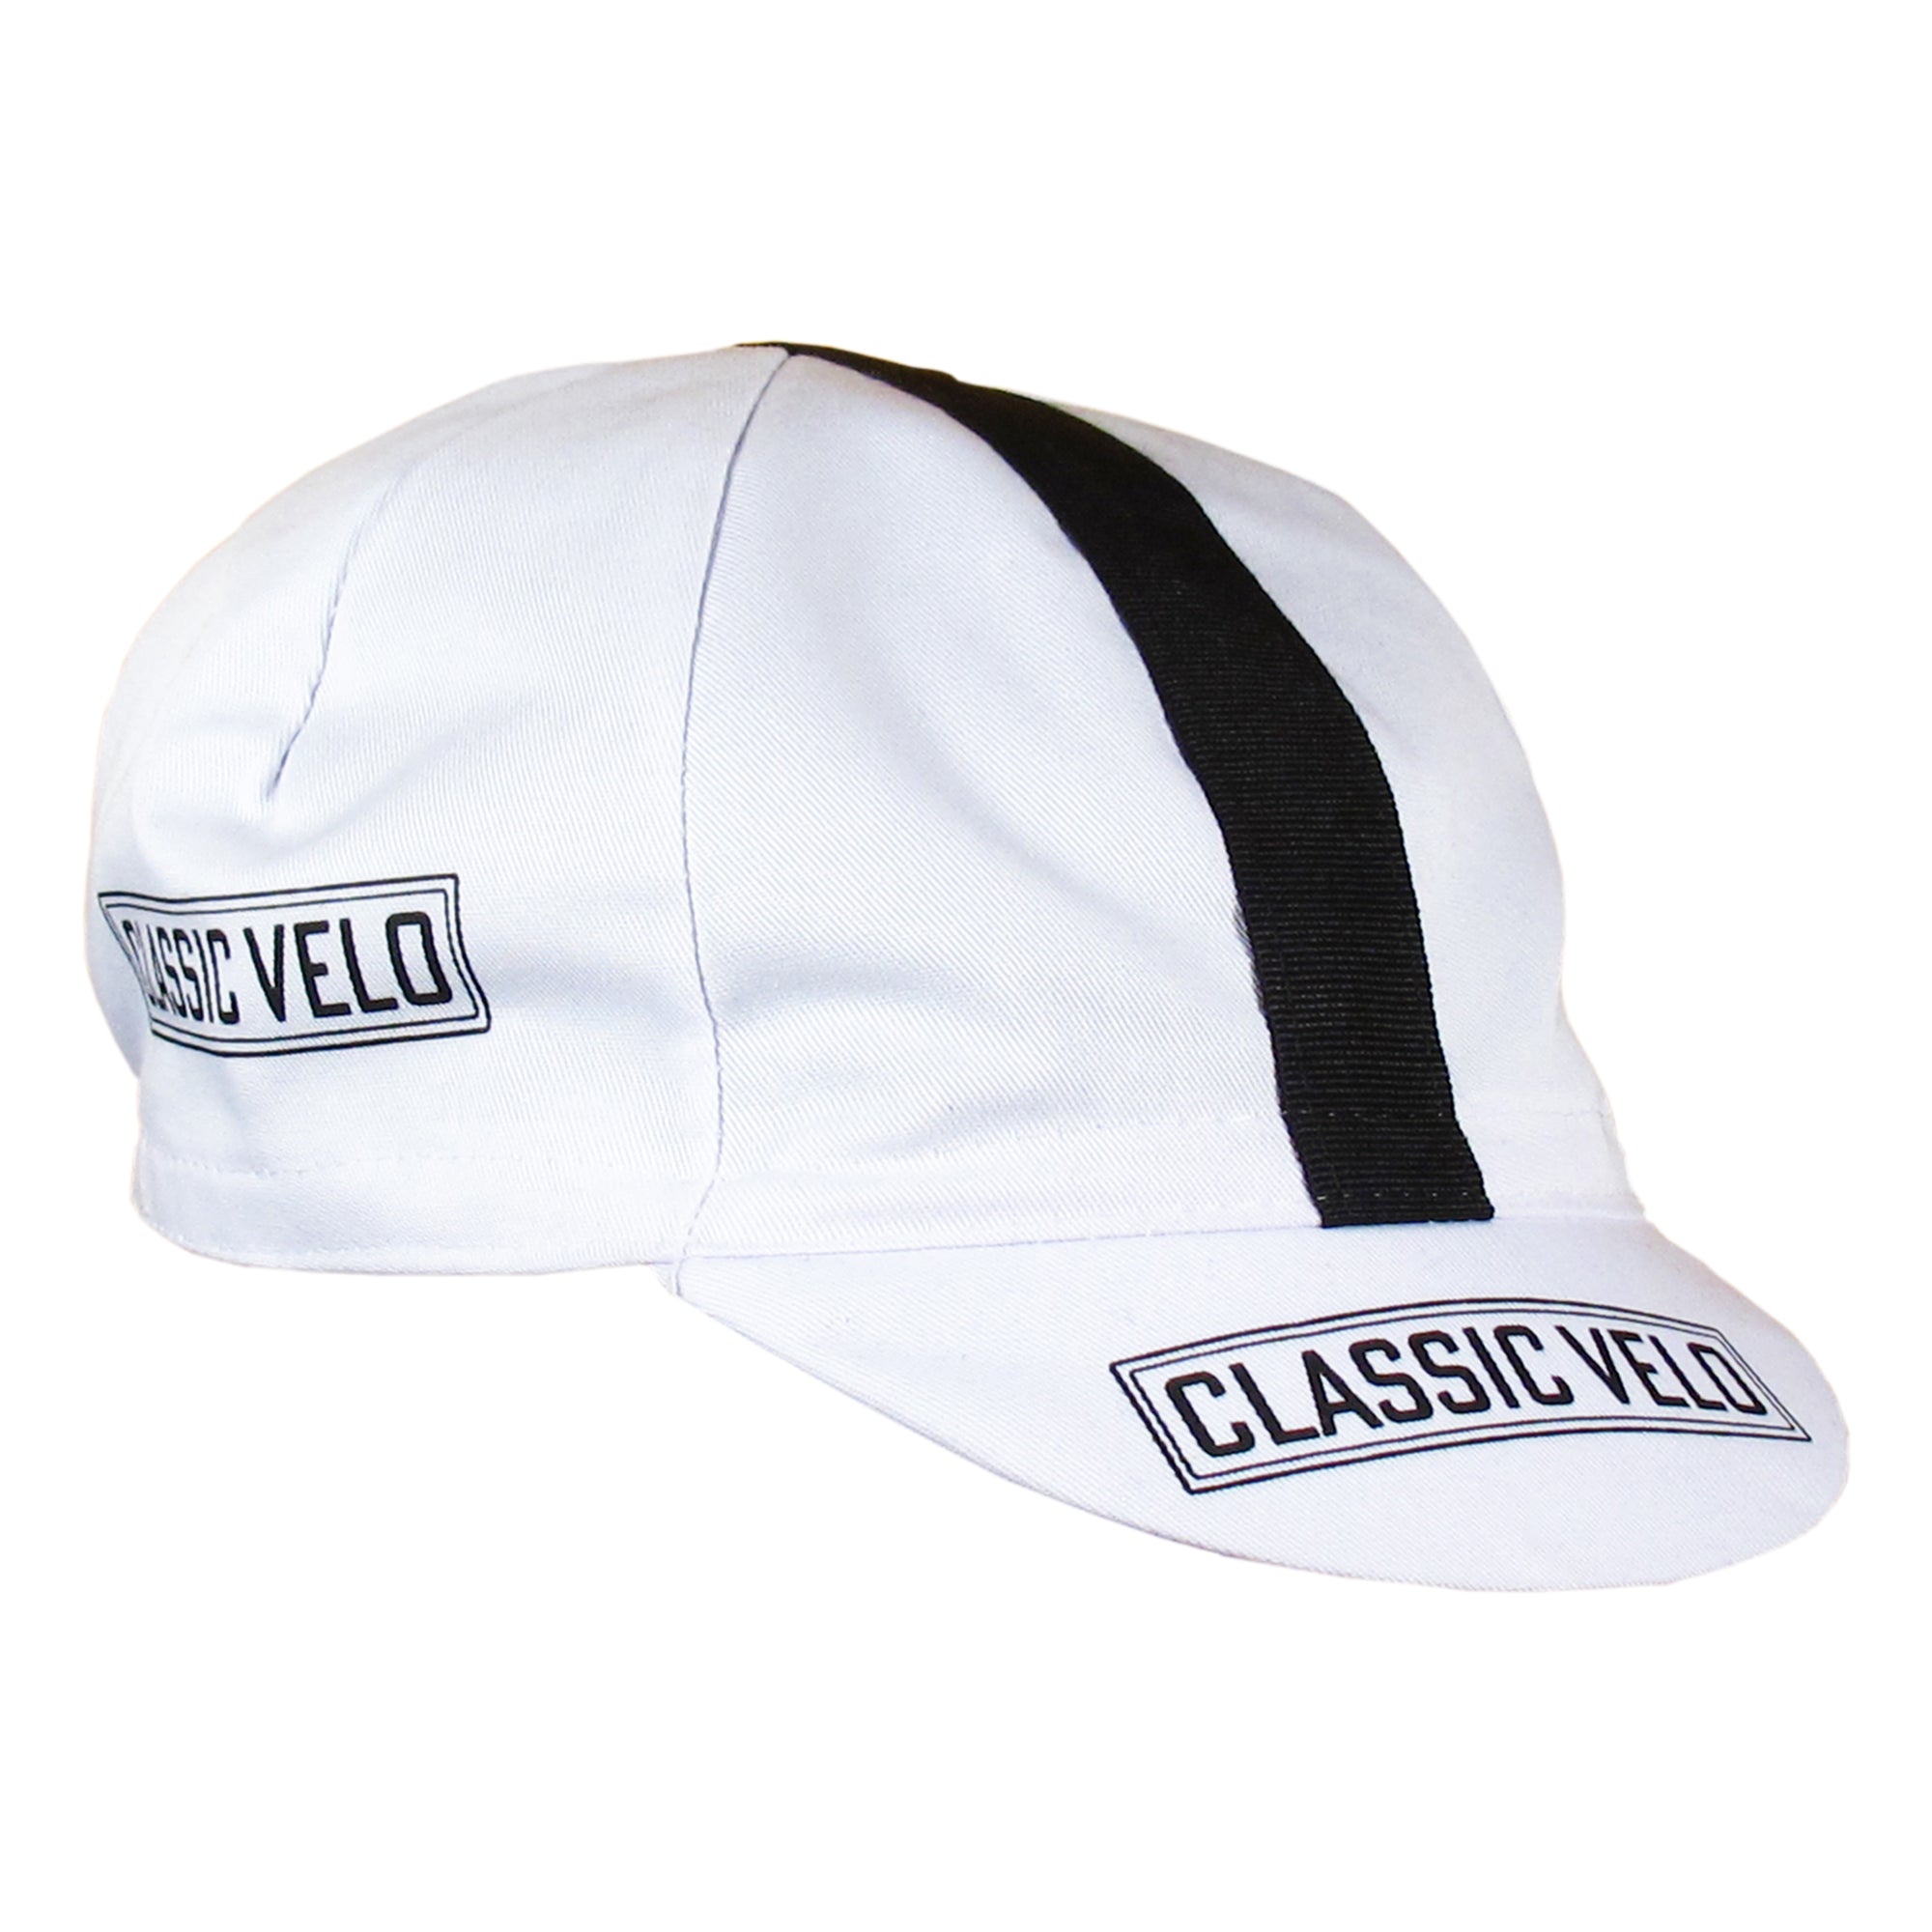 Classic Velo Cycling Cap White